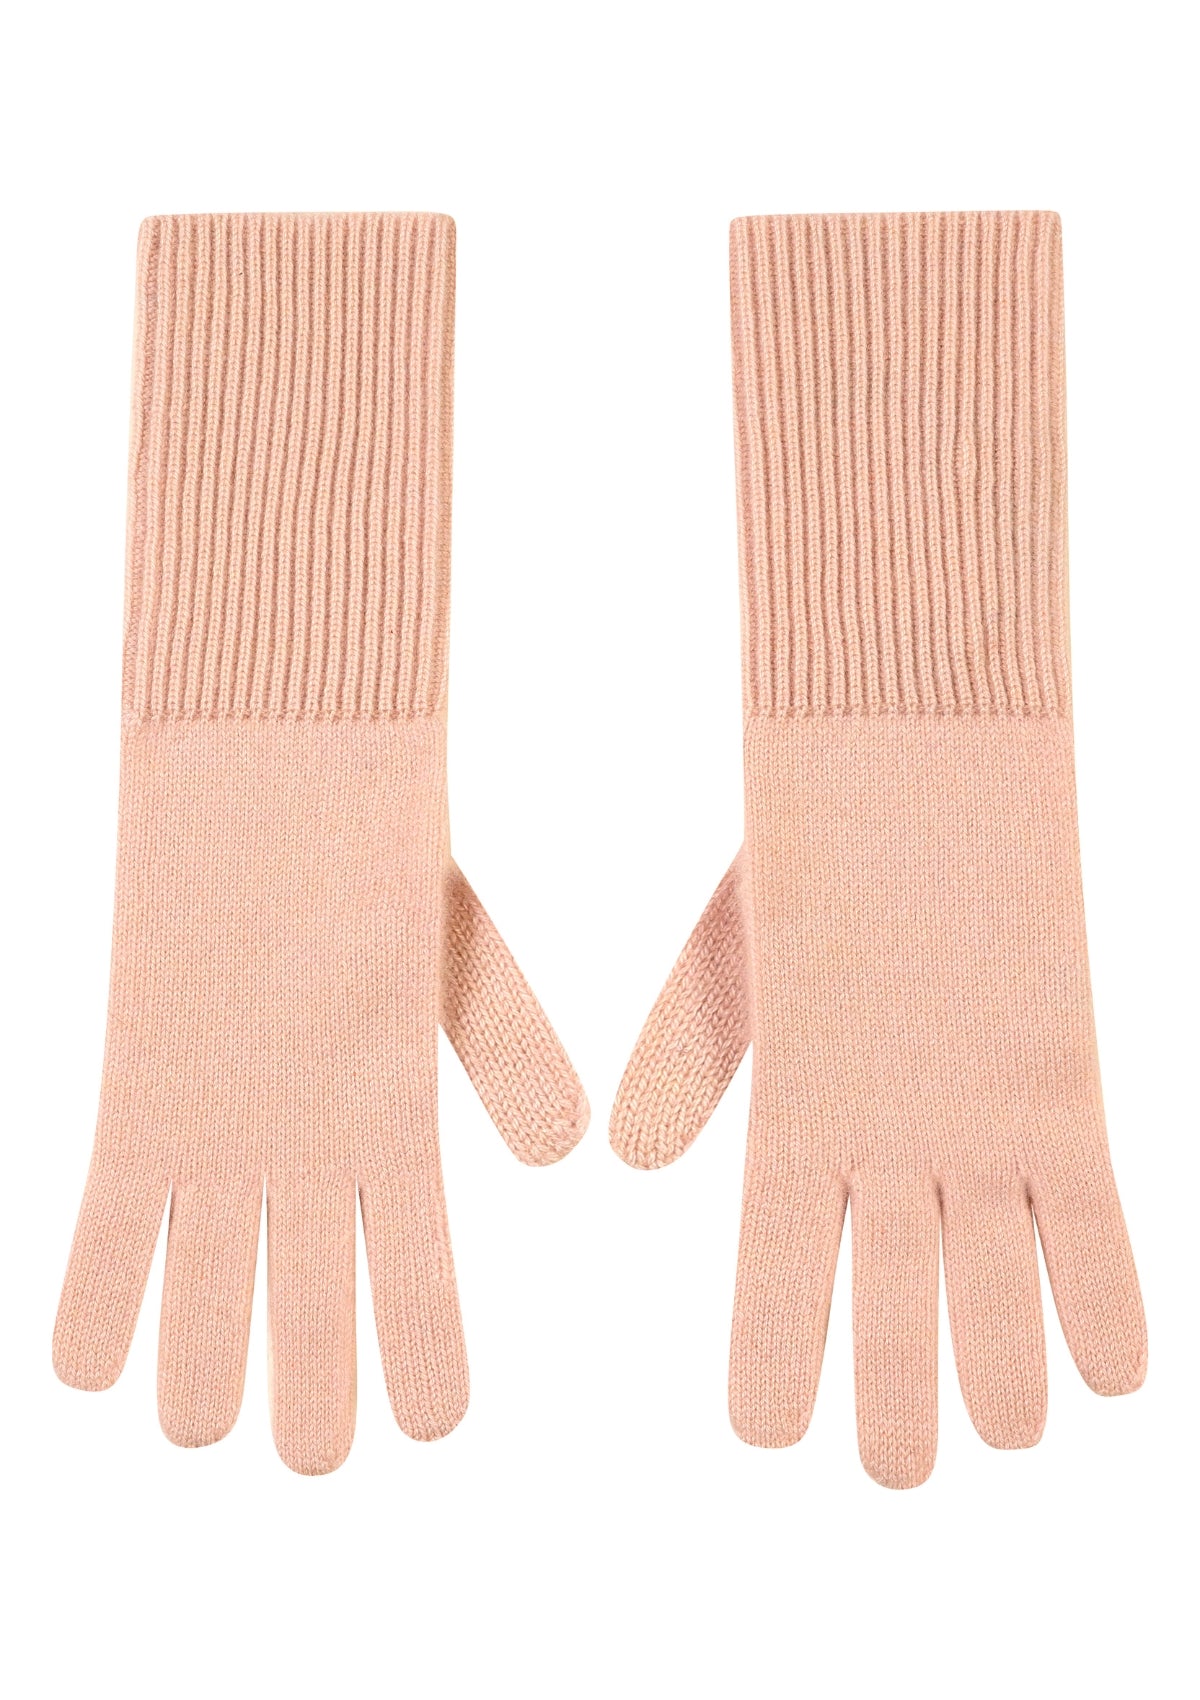 Cashmere Glove in Toffee